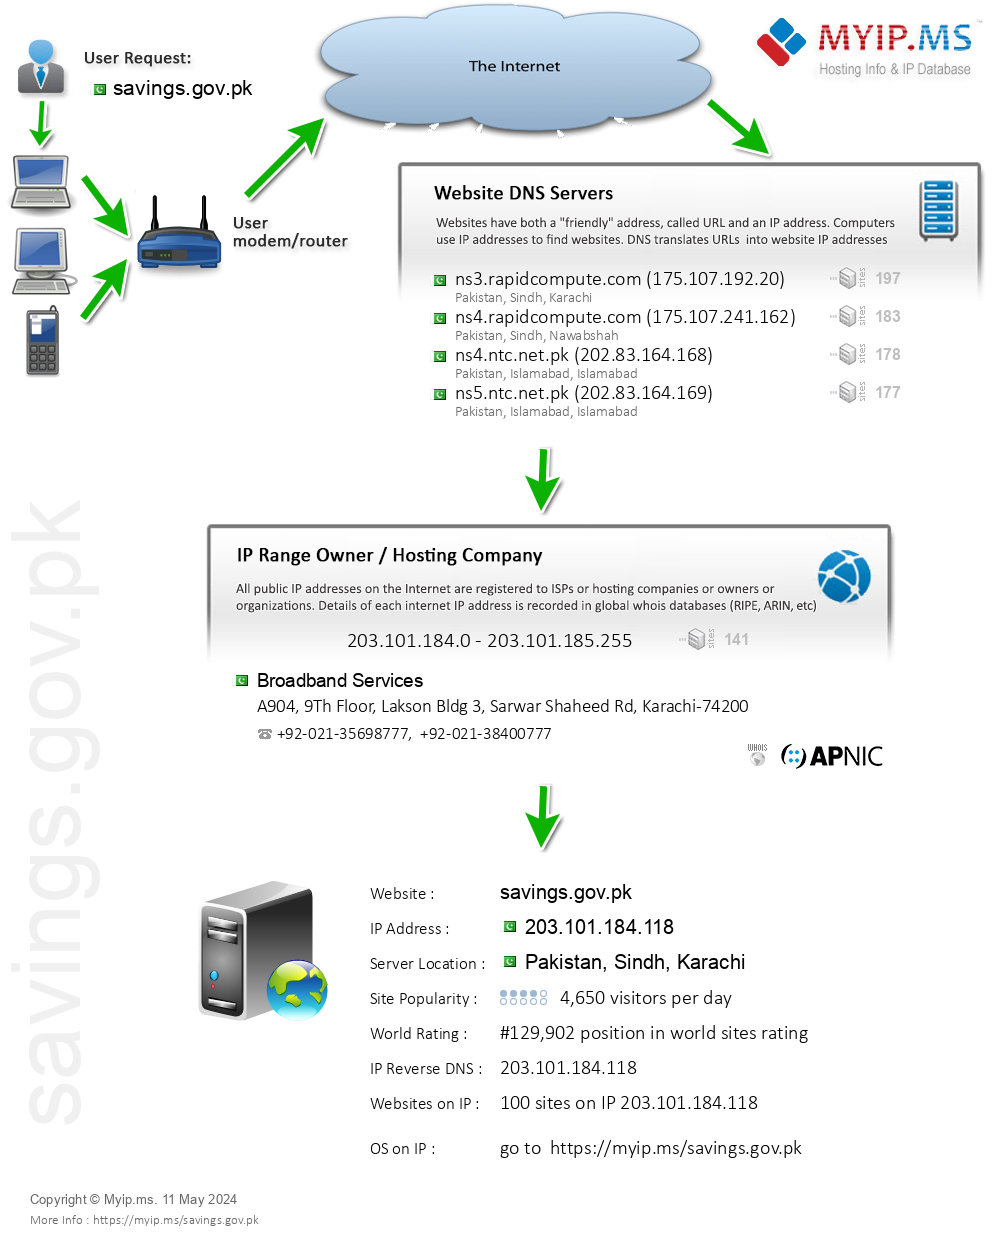 Savings.gov.pk - Website Hosting Visual IP Diagram